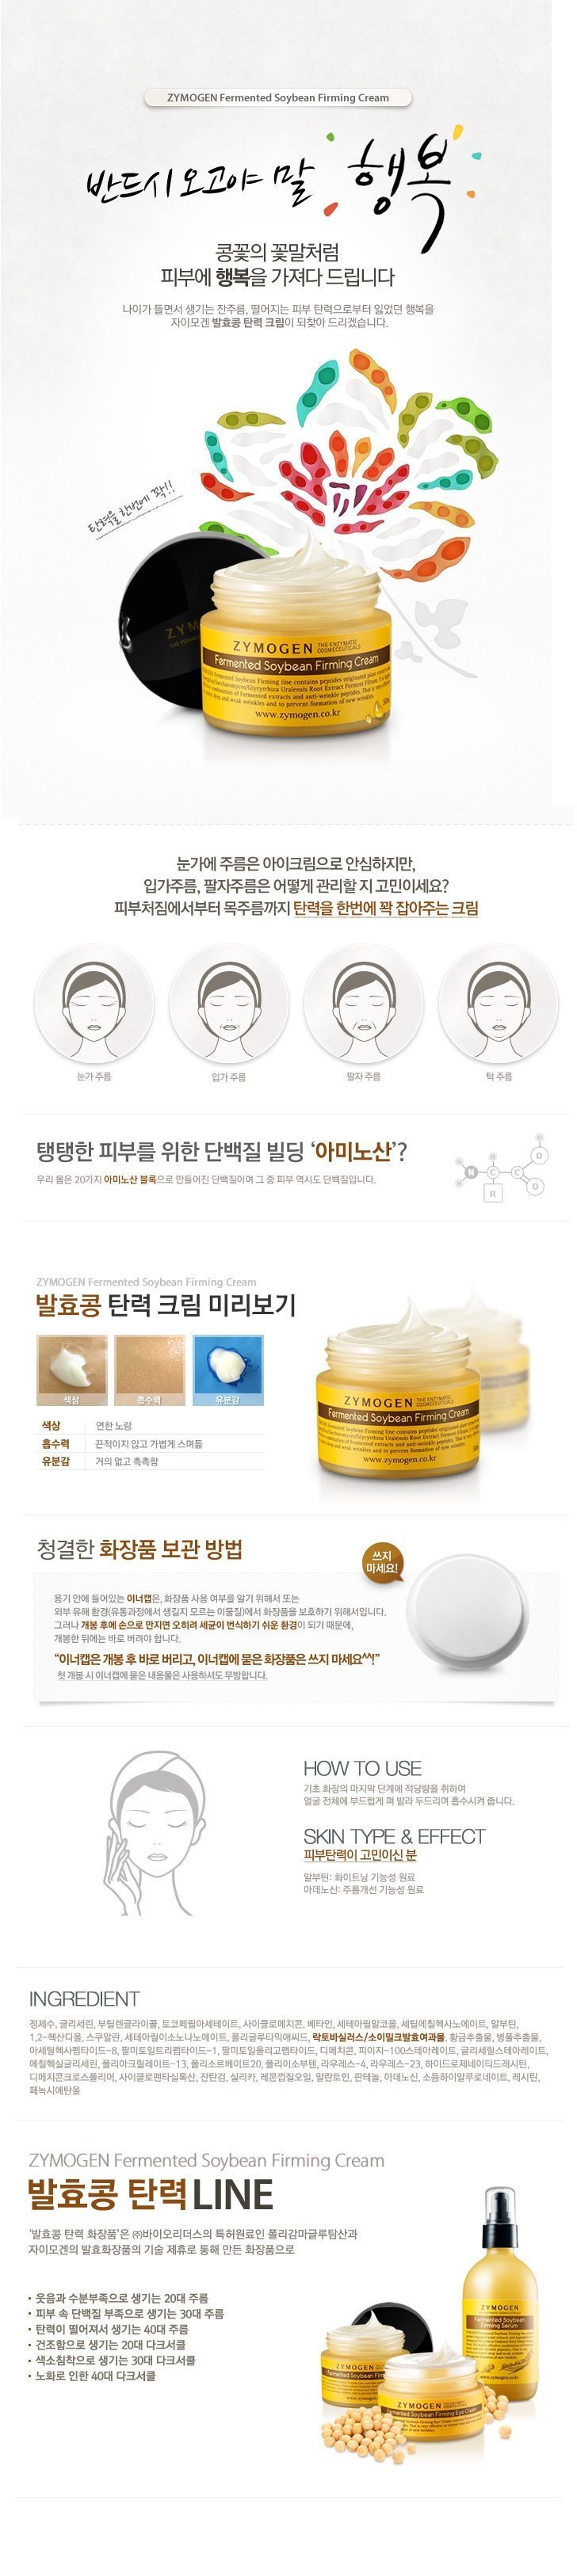 Zymogen Fermented Soybean Firming Cream korean cosmetic skincar product online shop malaysia brazil macau1